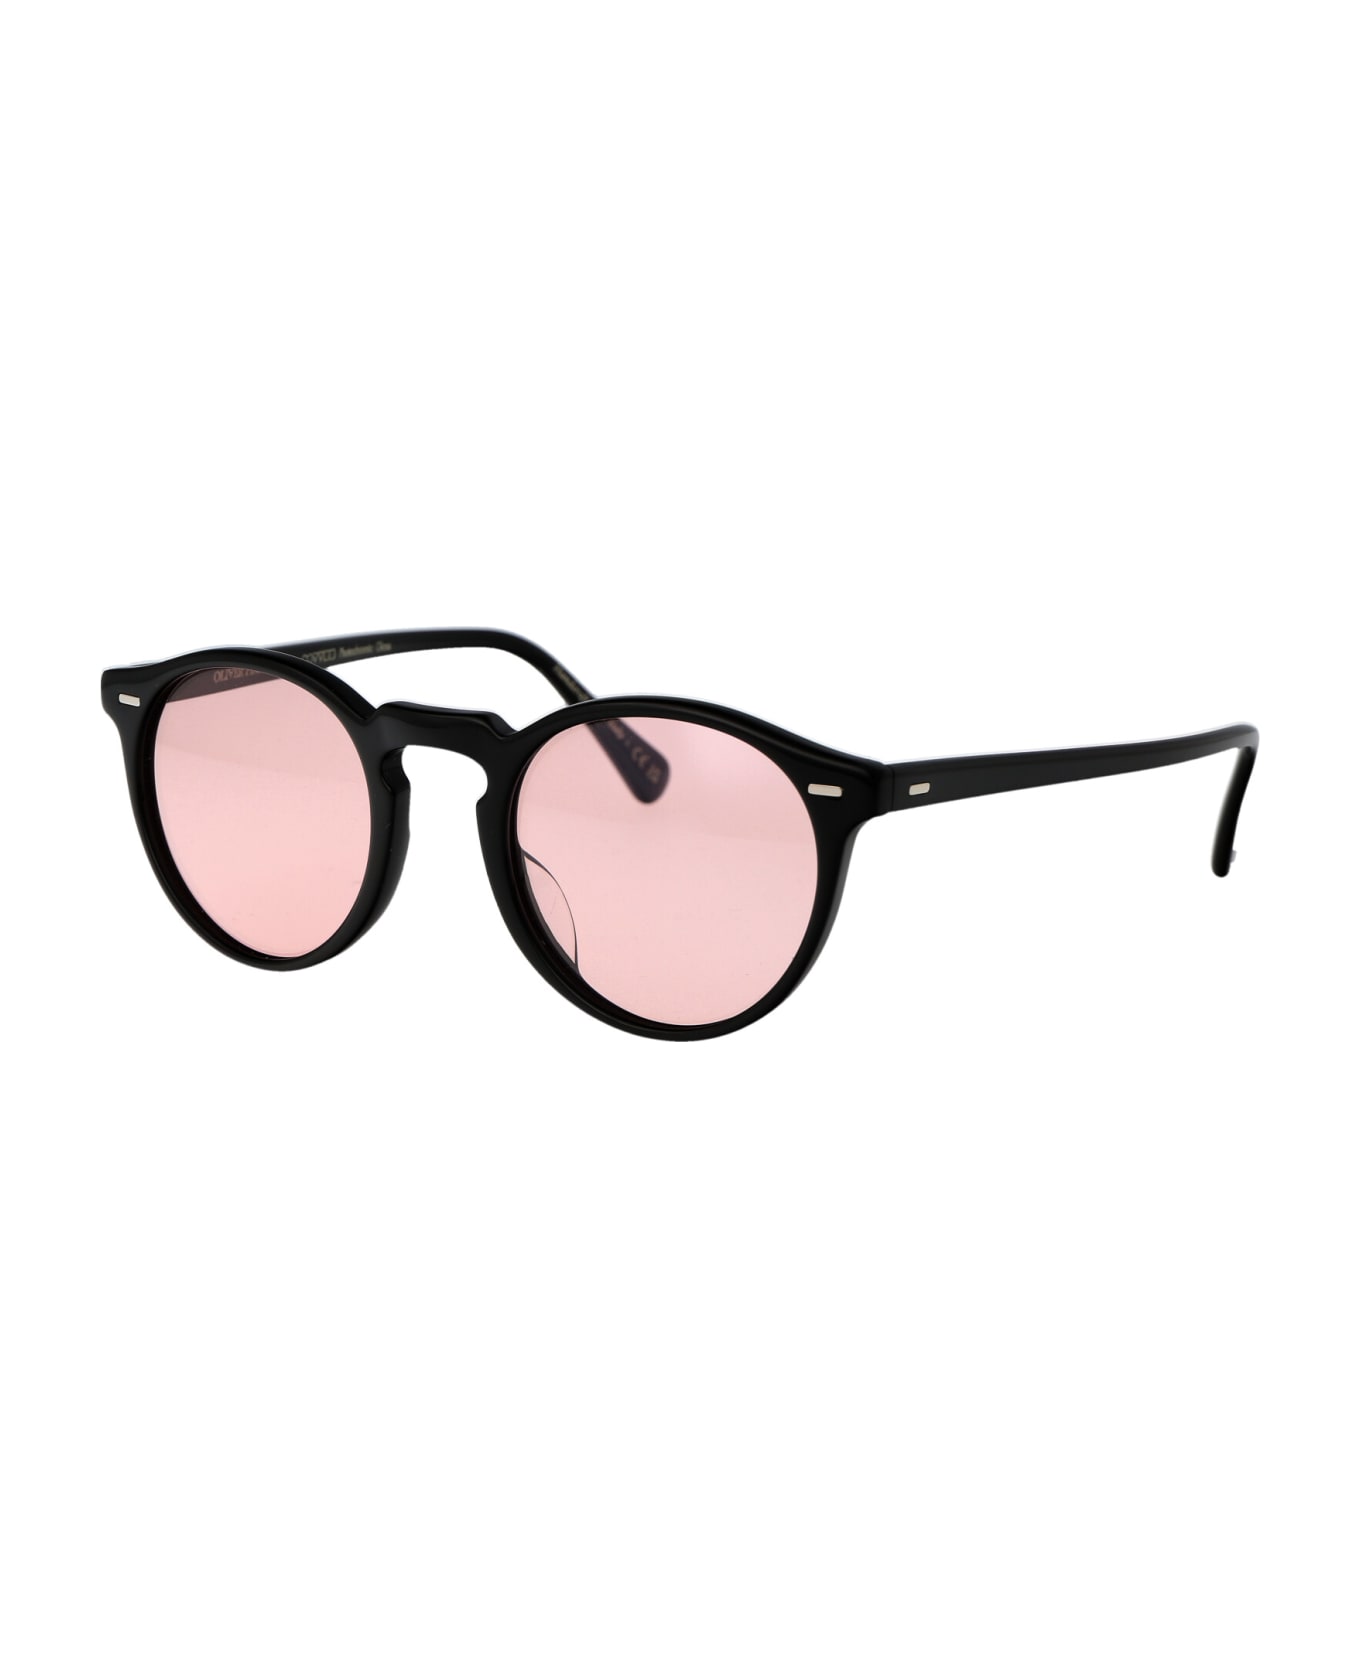 Oliver Peoples Gregory Peck Sun Sunglasses - 10054Q Black